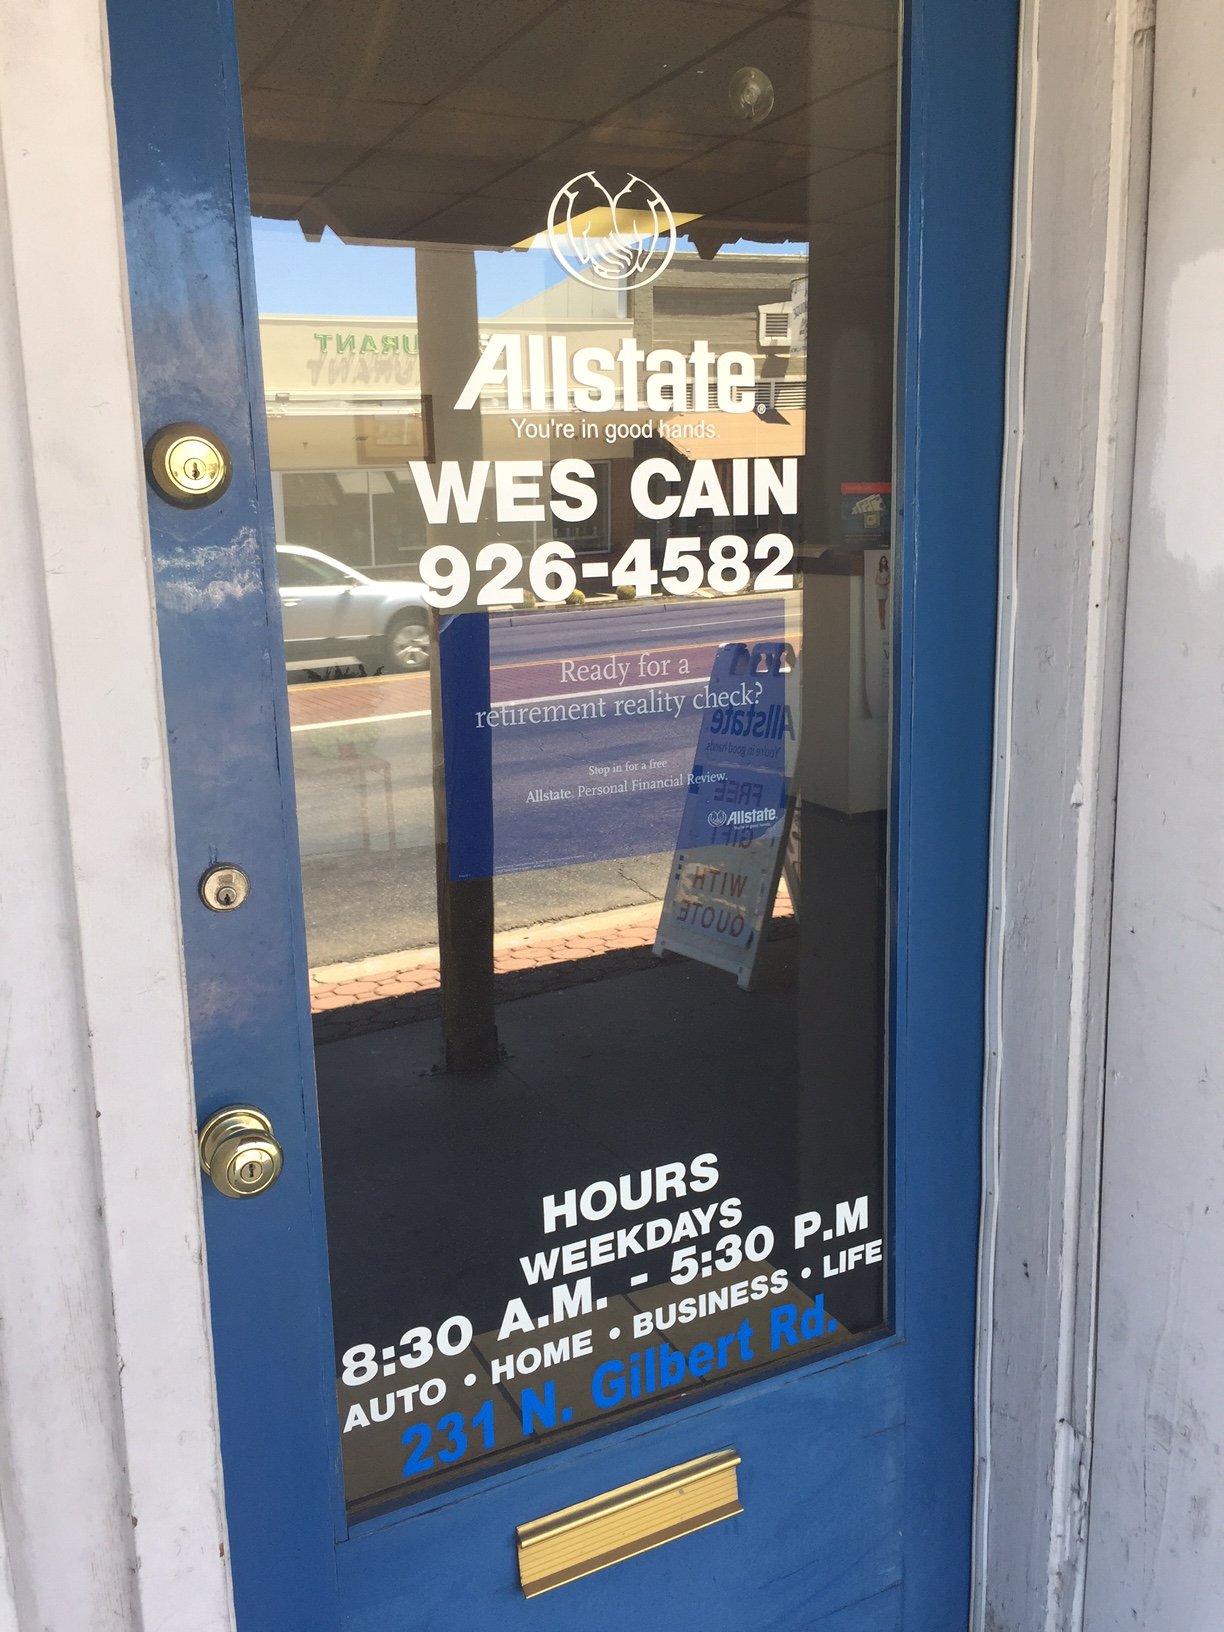 Wes Cain - Allstate Insurance Agent in Gilbert, AZ